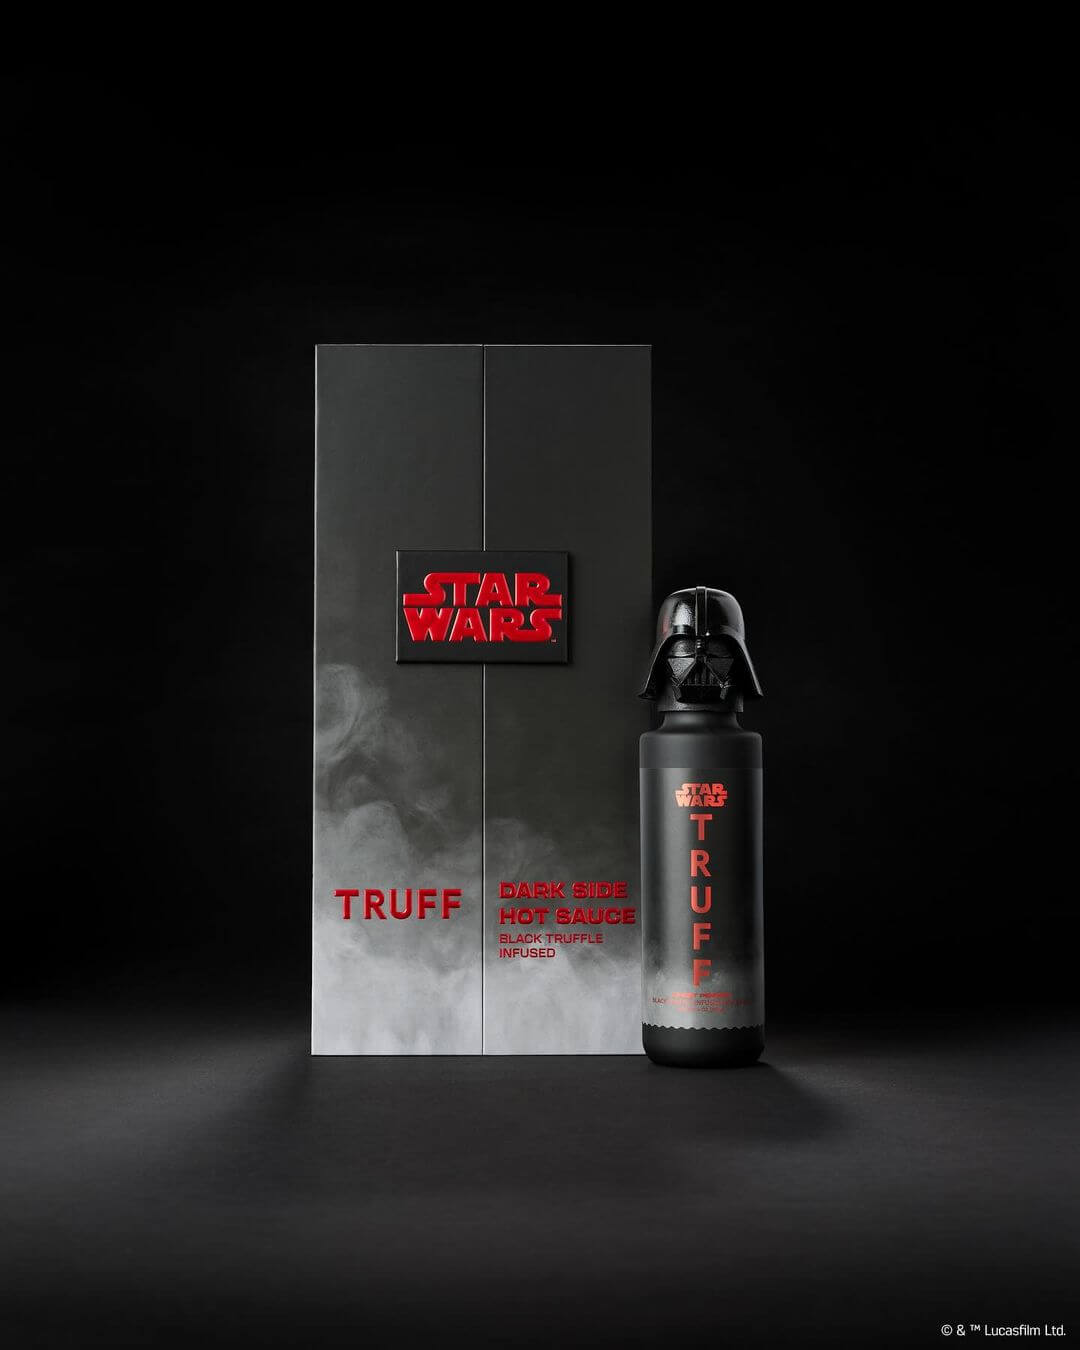 TRUFF Darth Vader Hot Sauce